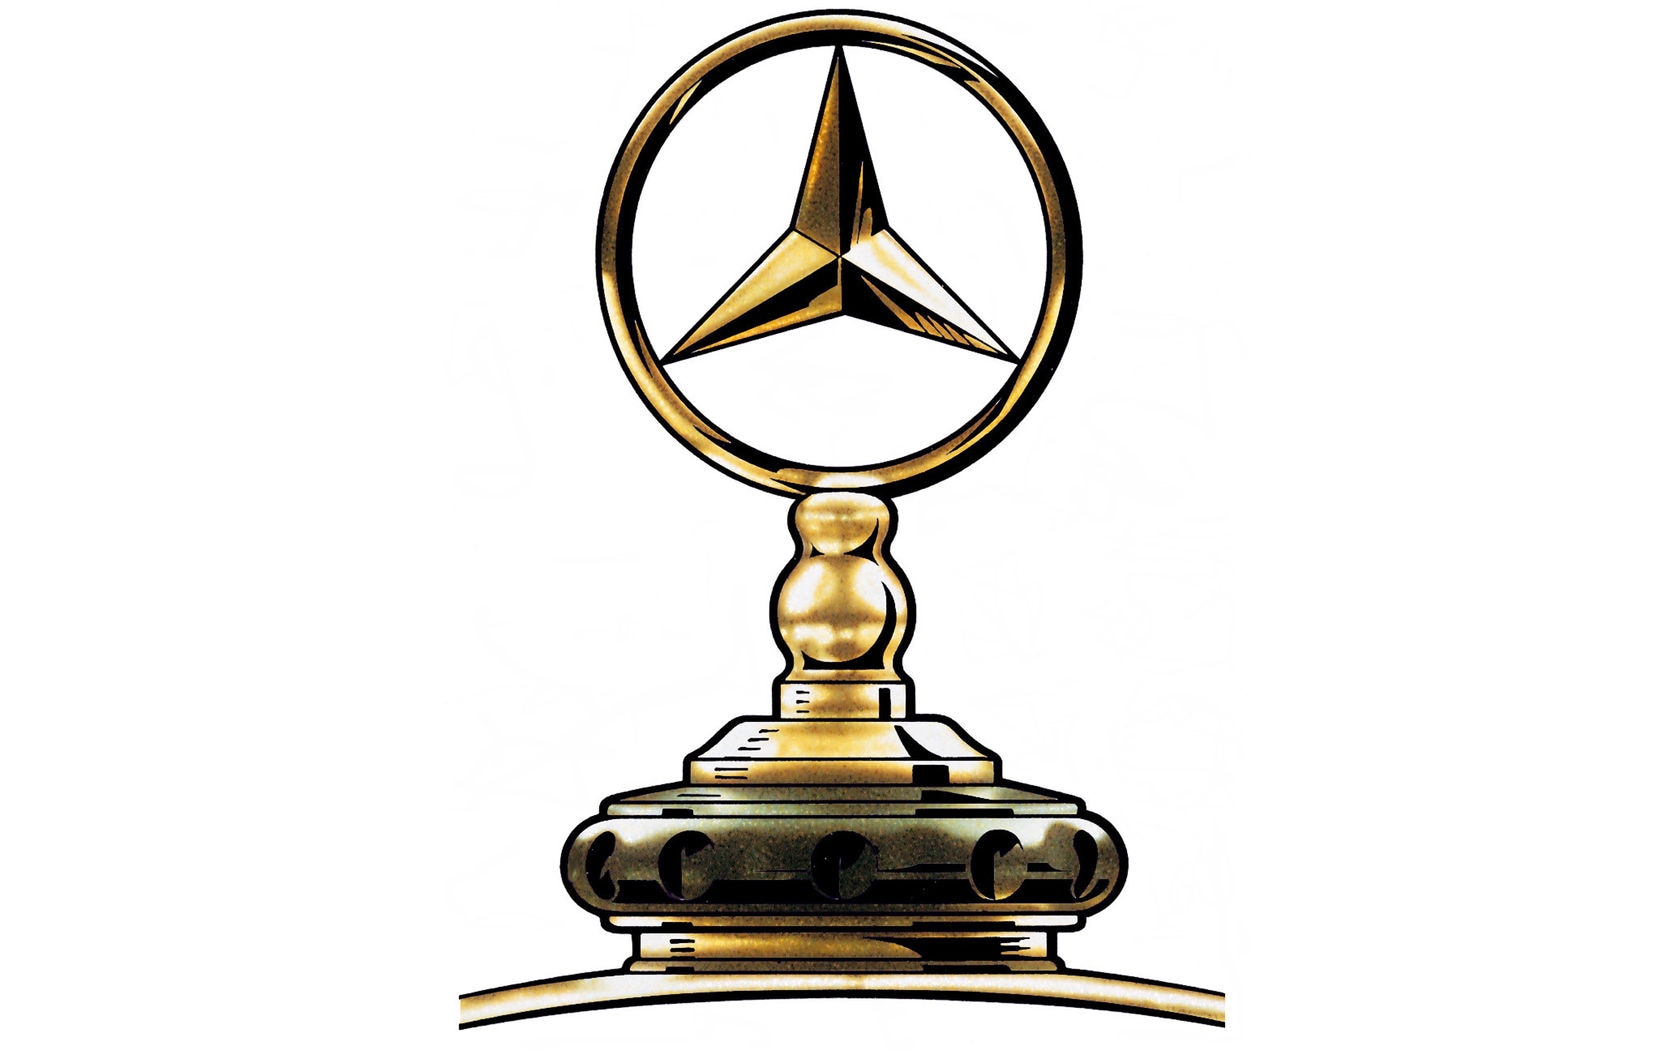 Mercedes logos PNG images free download | Pngimg.com